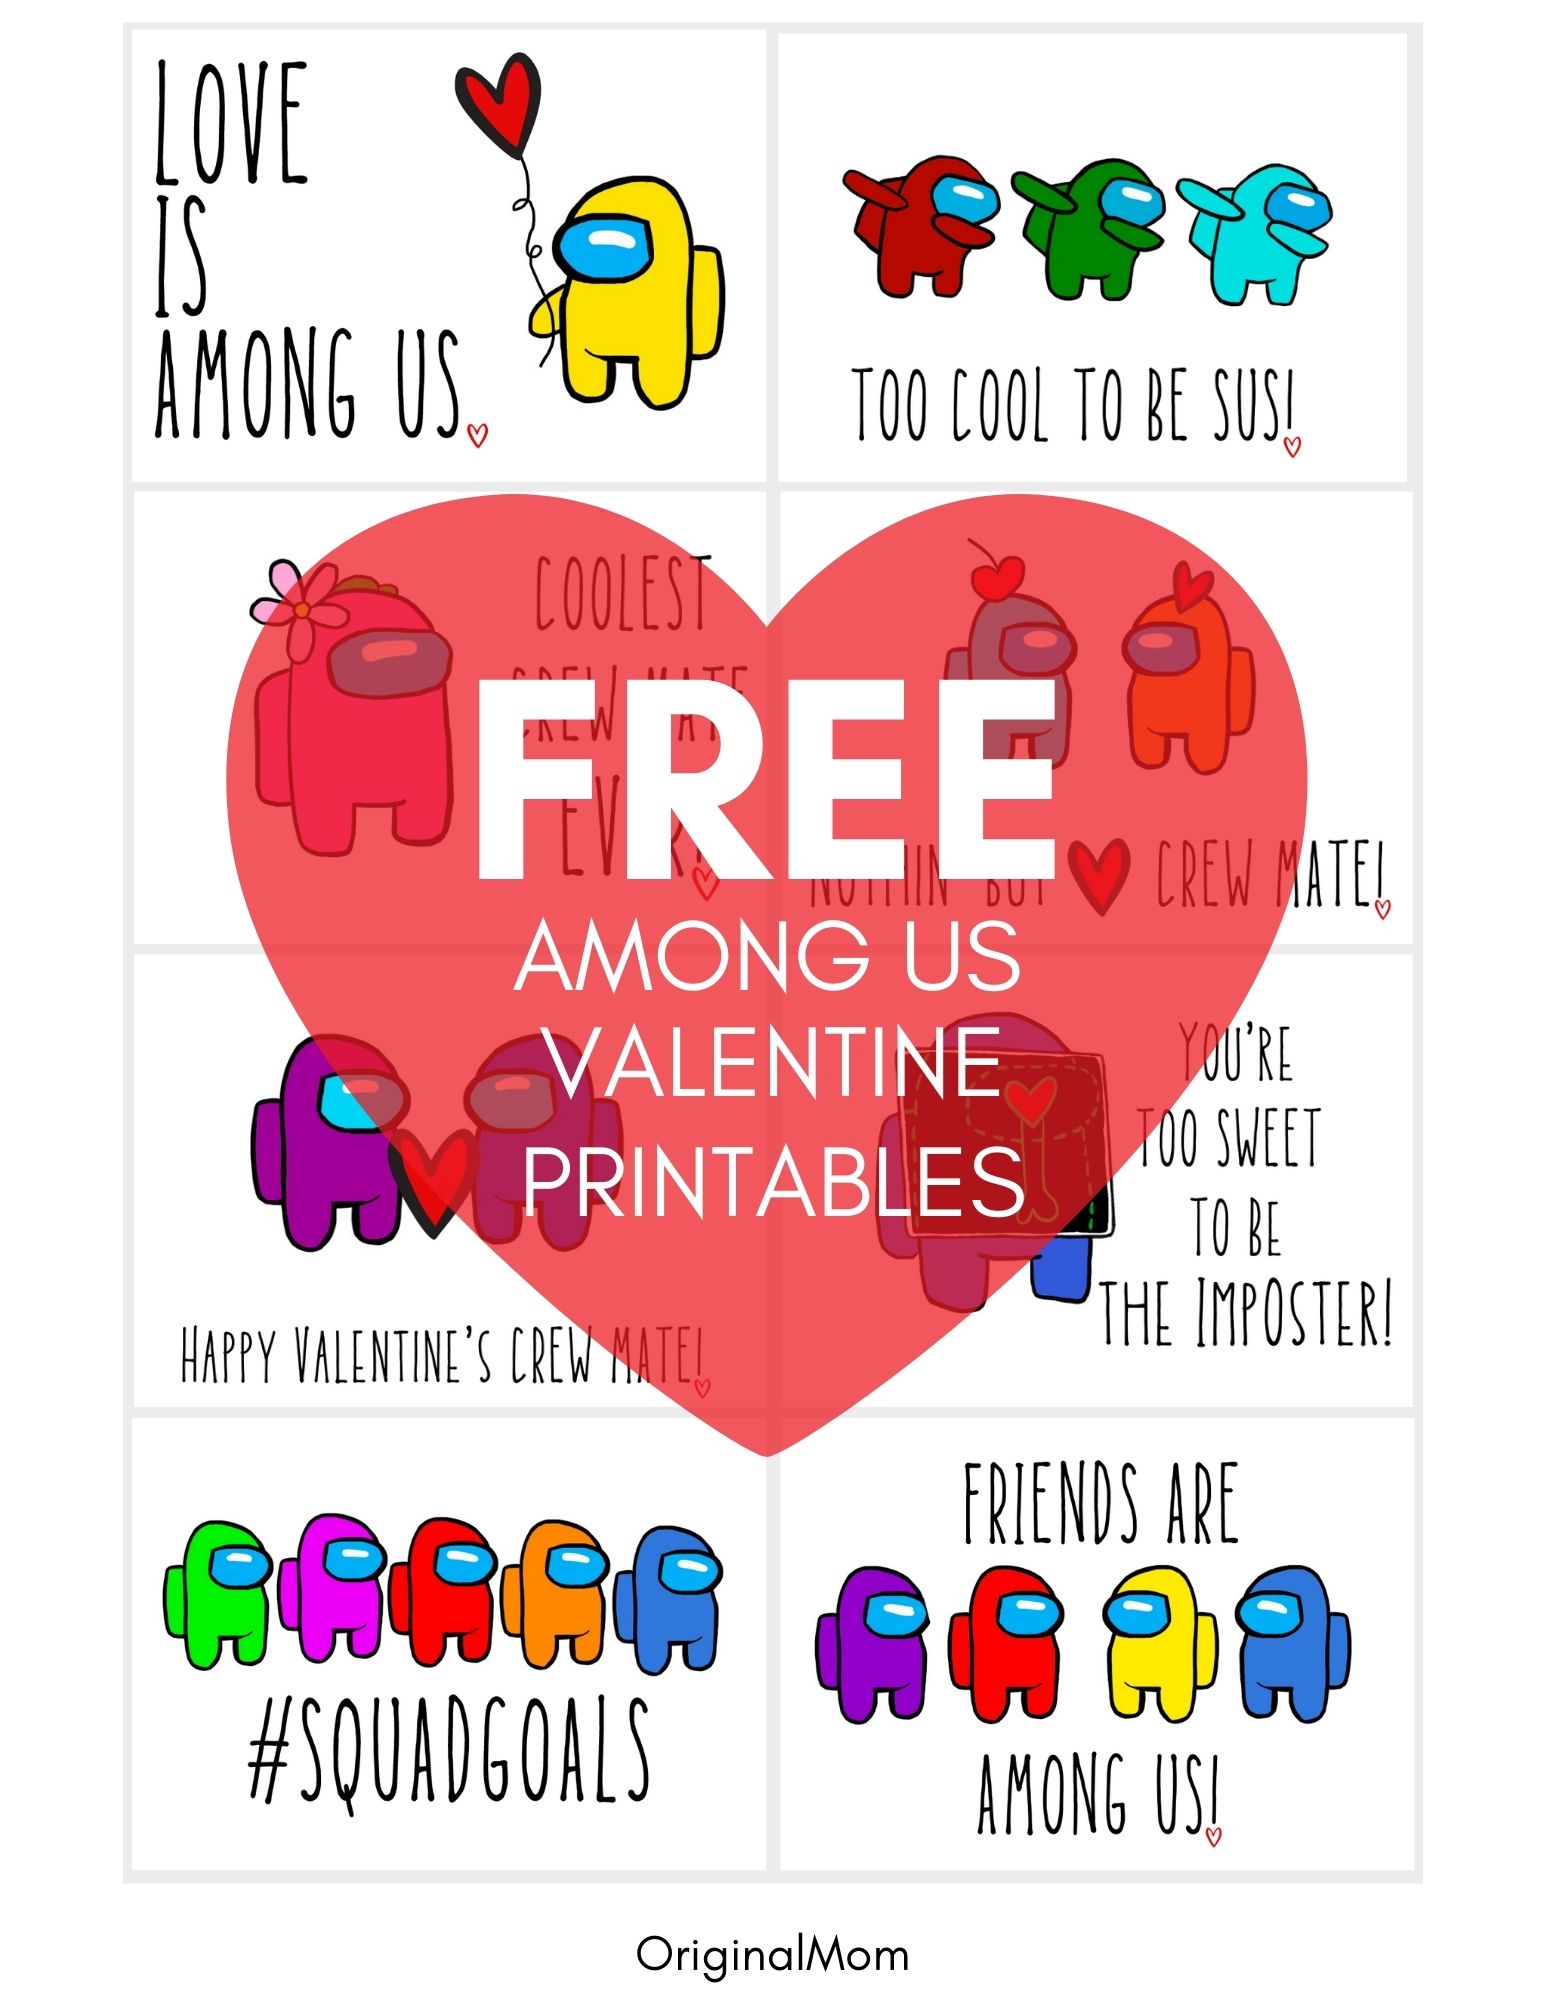 Among Us Valentine Printables - OriginalMOM